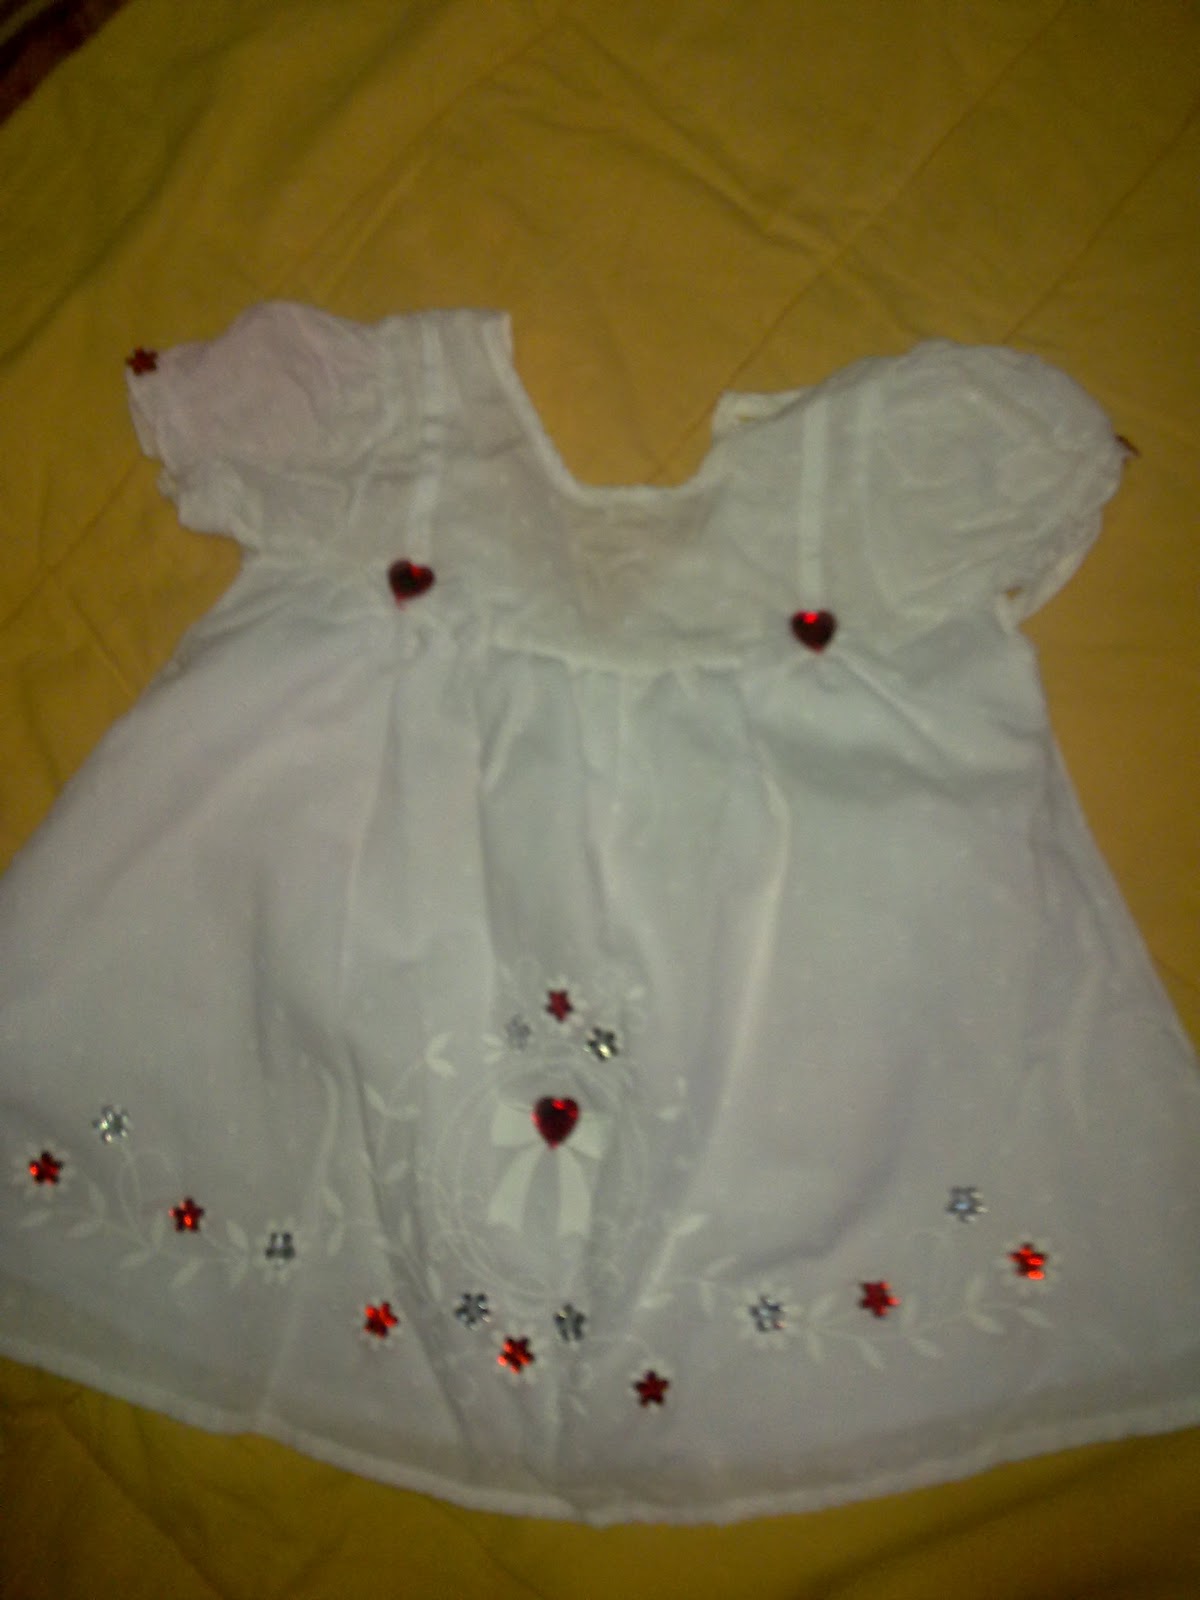 Jahit Manik Baju Kanak Kanak Sequin Design For Kids Dress 2011